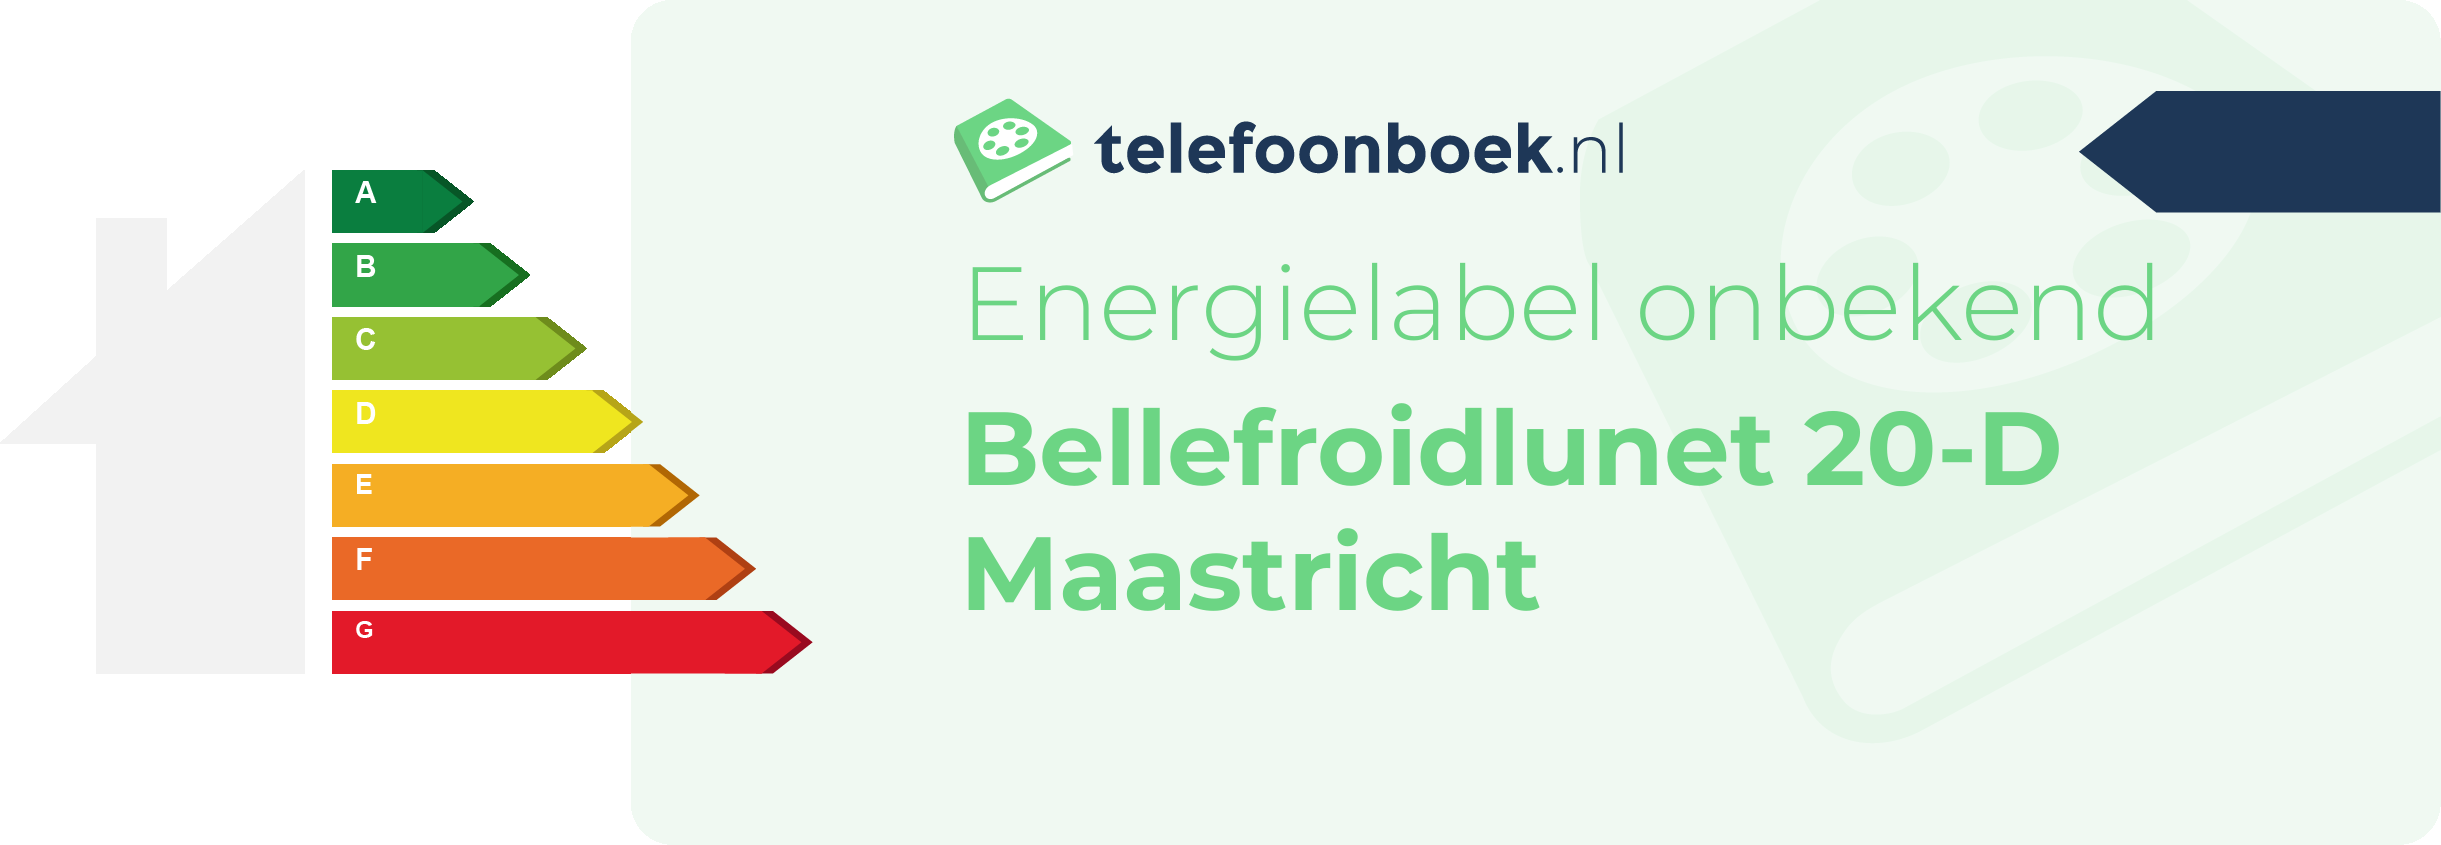 Energielabel Bellefroidlunet 20-D Maastricht